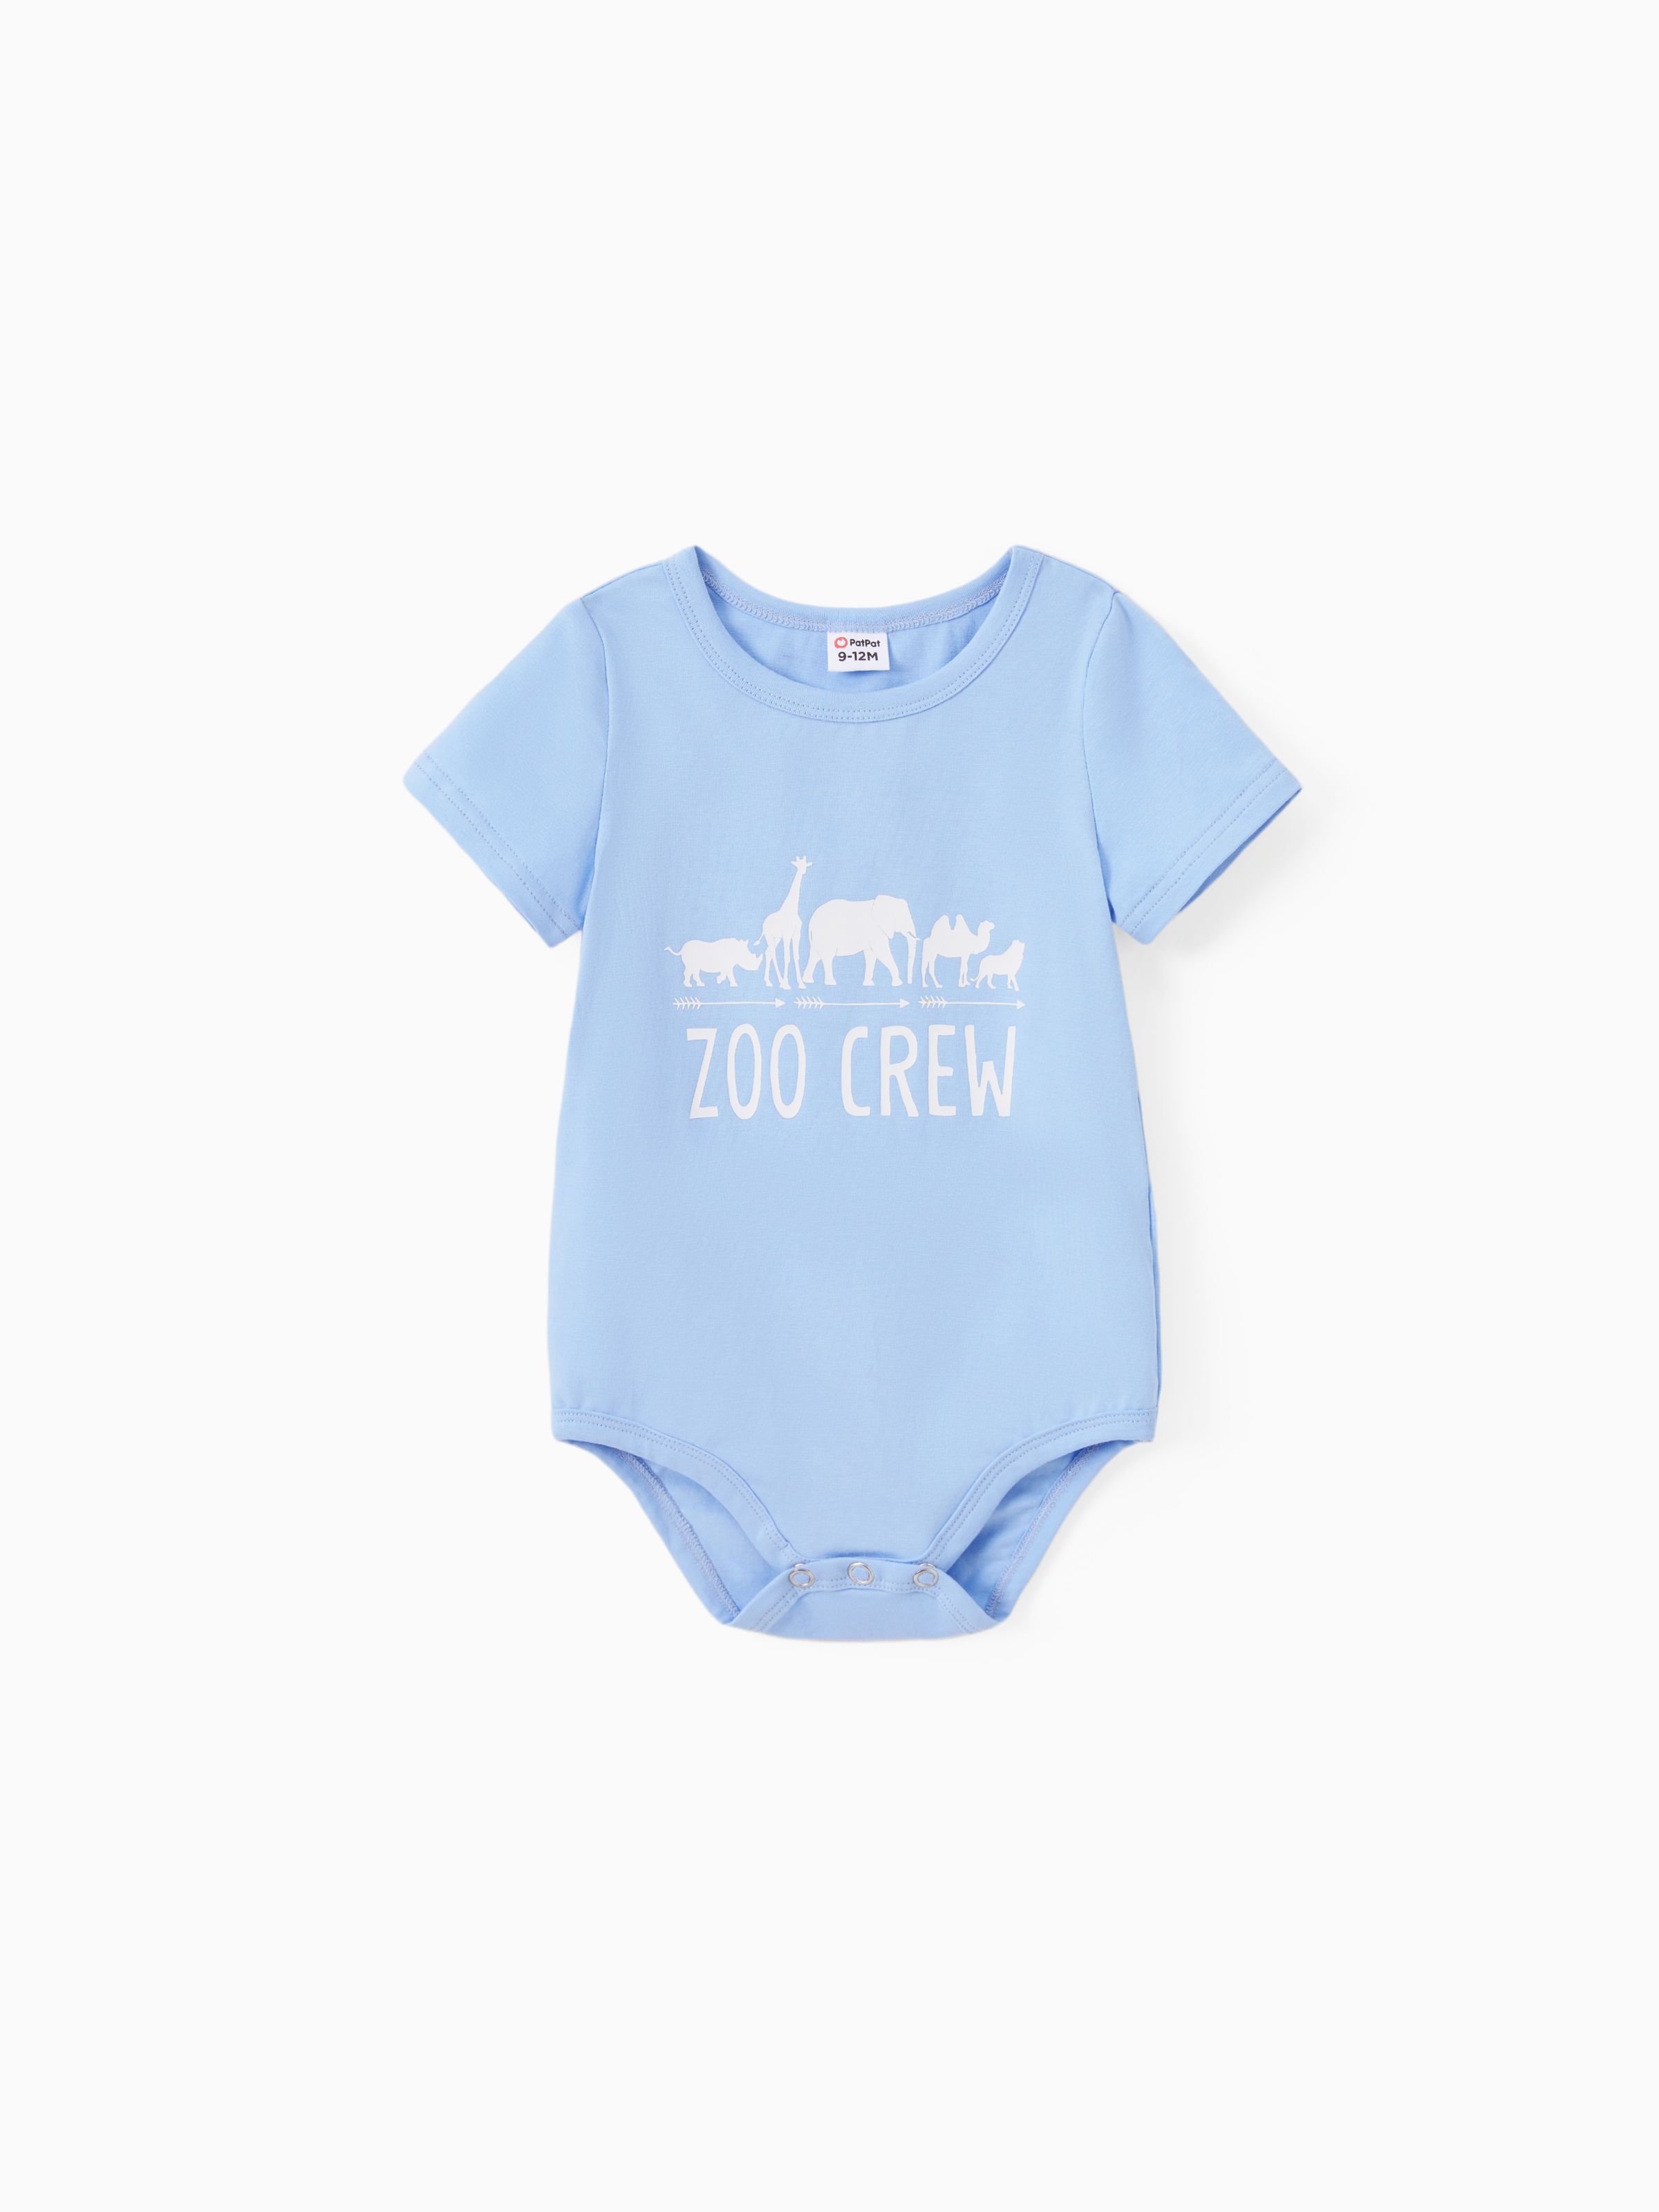 

Family Matching Cotton Short Sleeves Round Neck Animal Theme Zoo Crew Graphic Tee